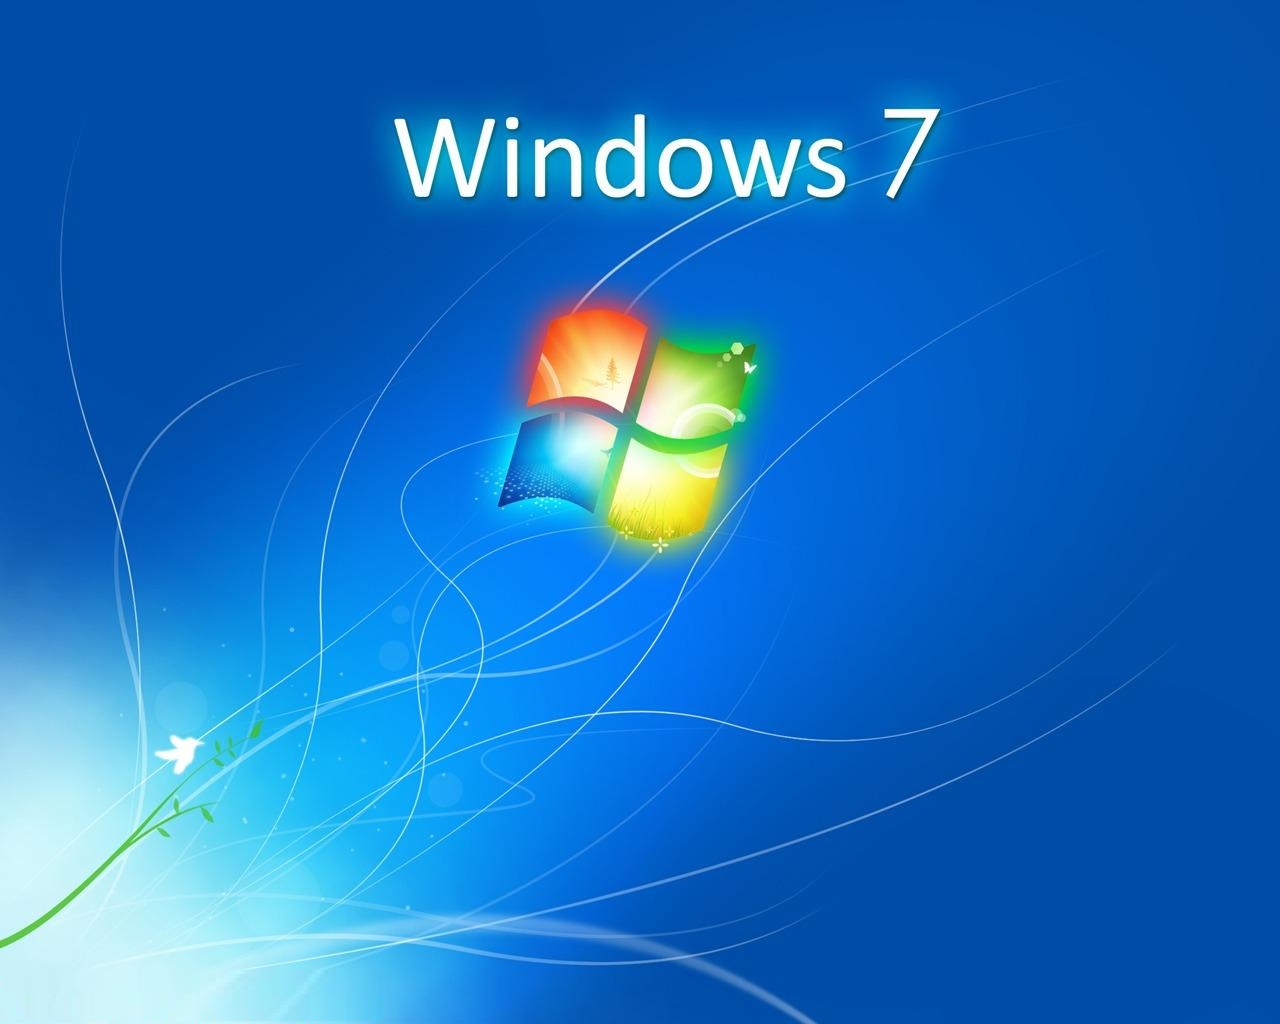  Microsoft desktop backgrounds free Hd microsoft desktop backgrounds